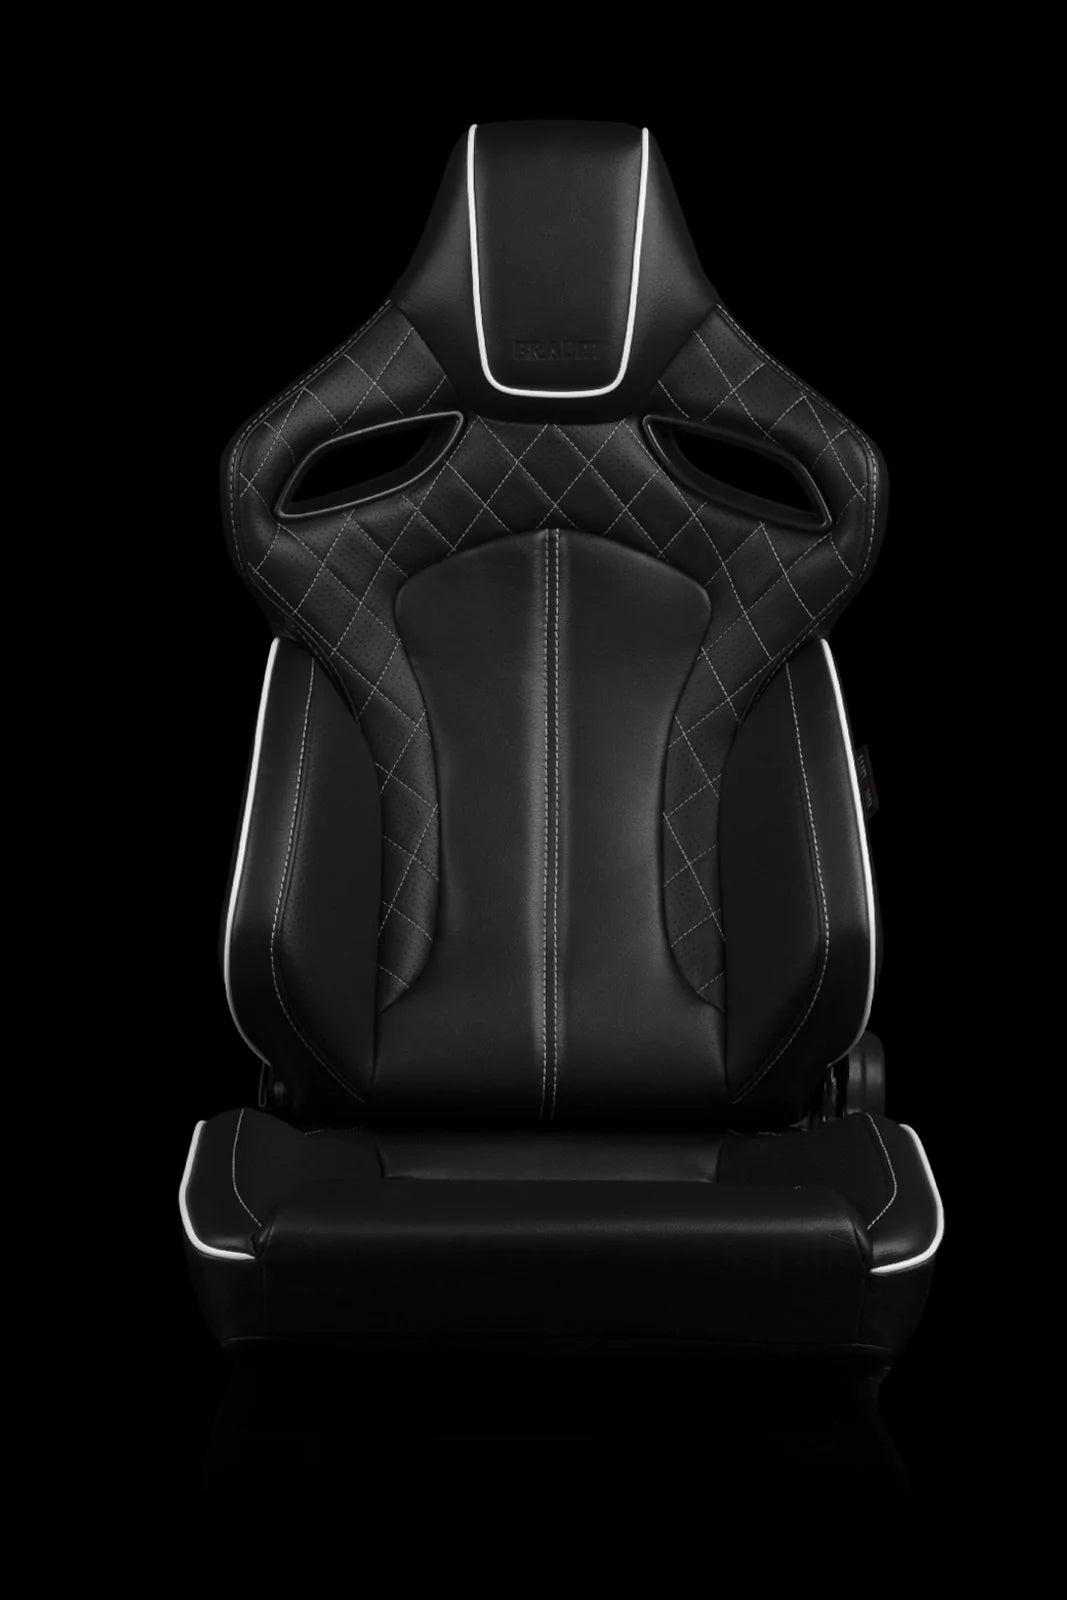 Braum Racing Seats Orue Series - Black Diamond (White Stitching)